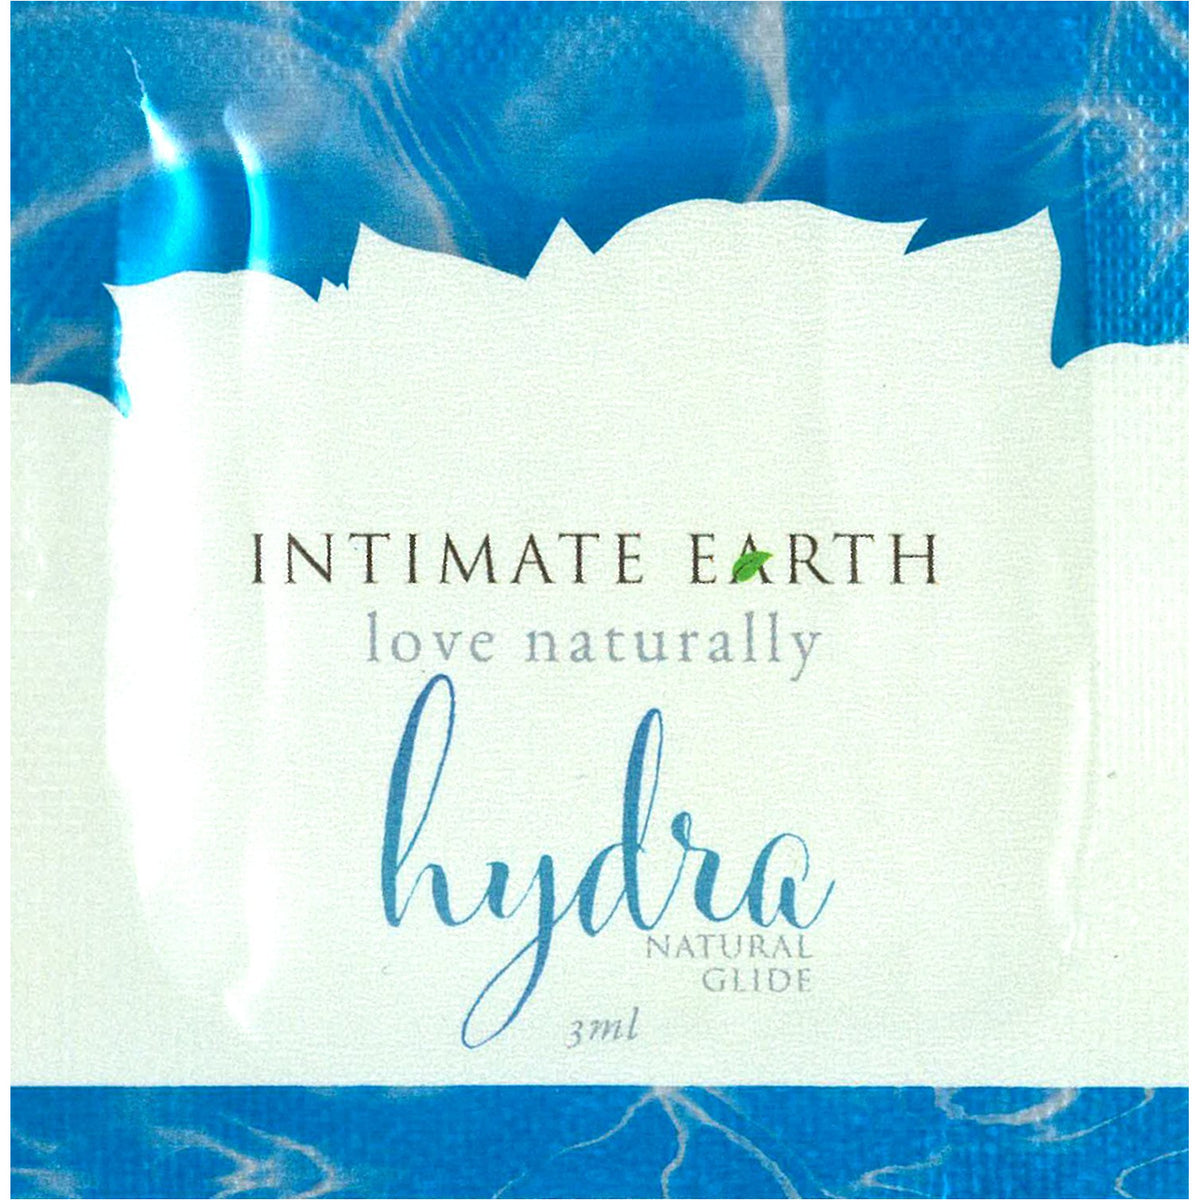 Intimate Earth Hydra - Water Based Glide - 3ml/.1oz